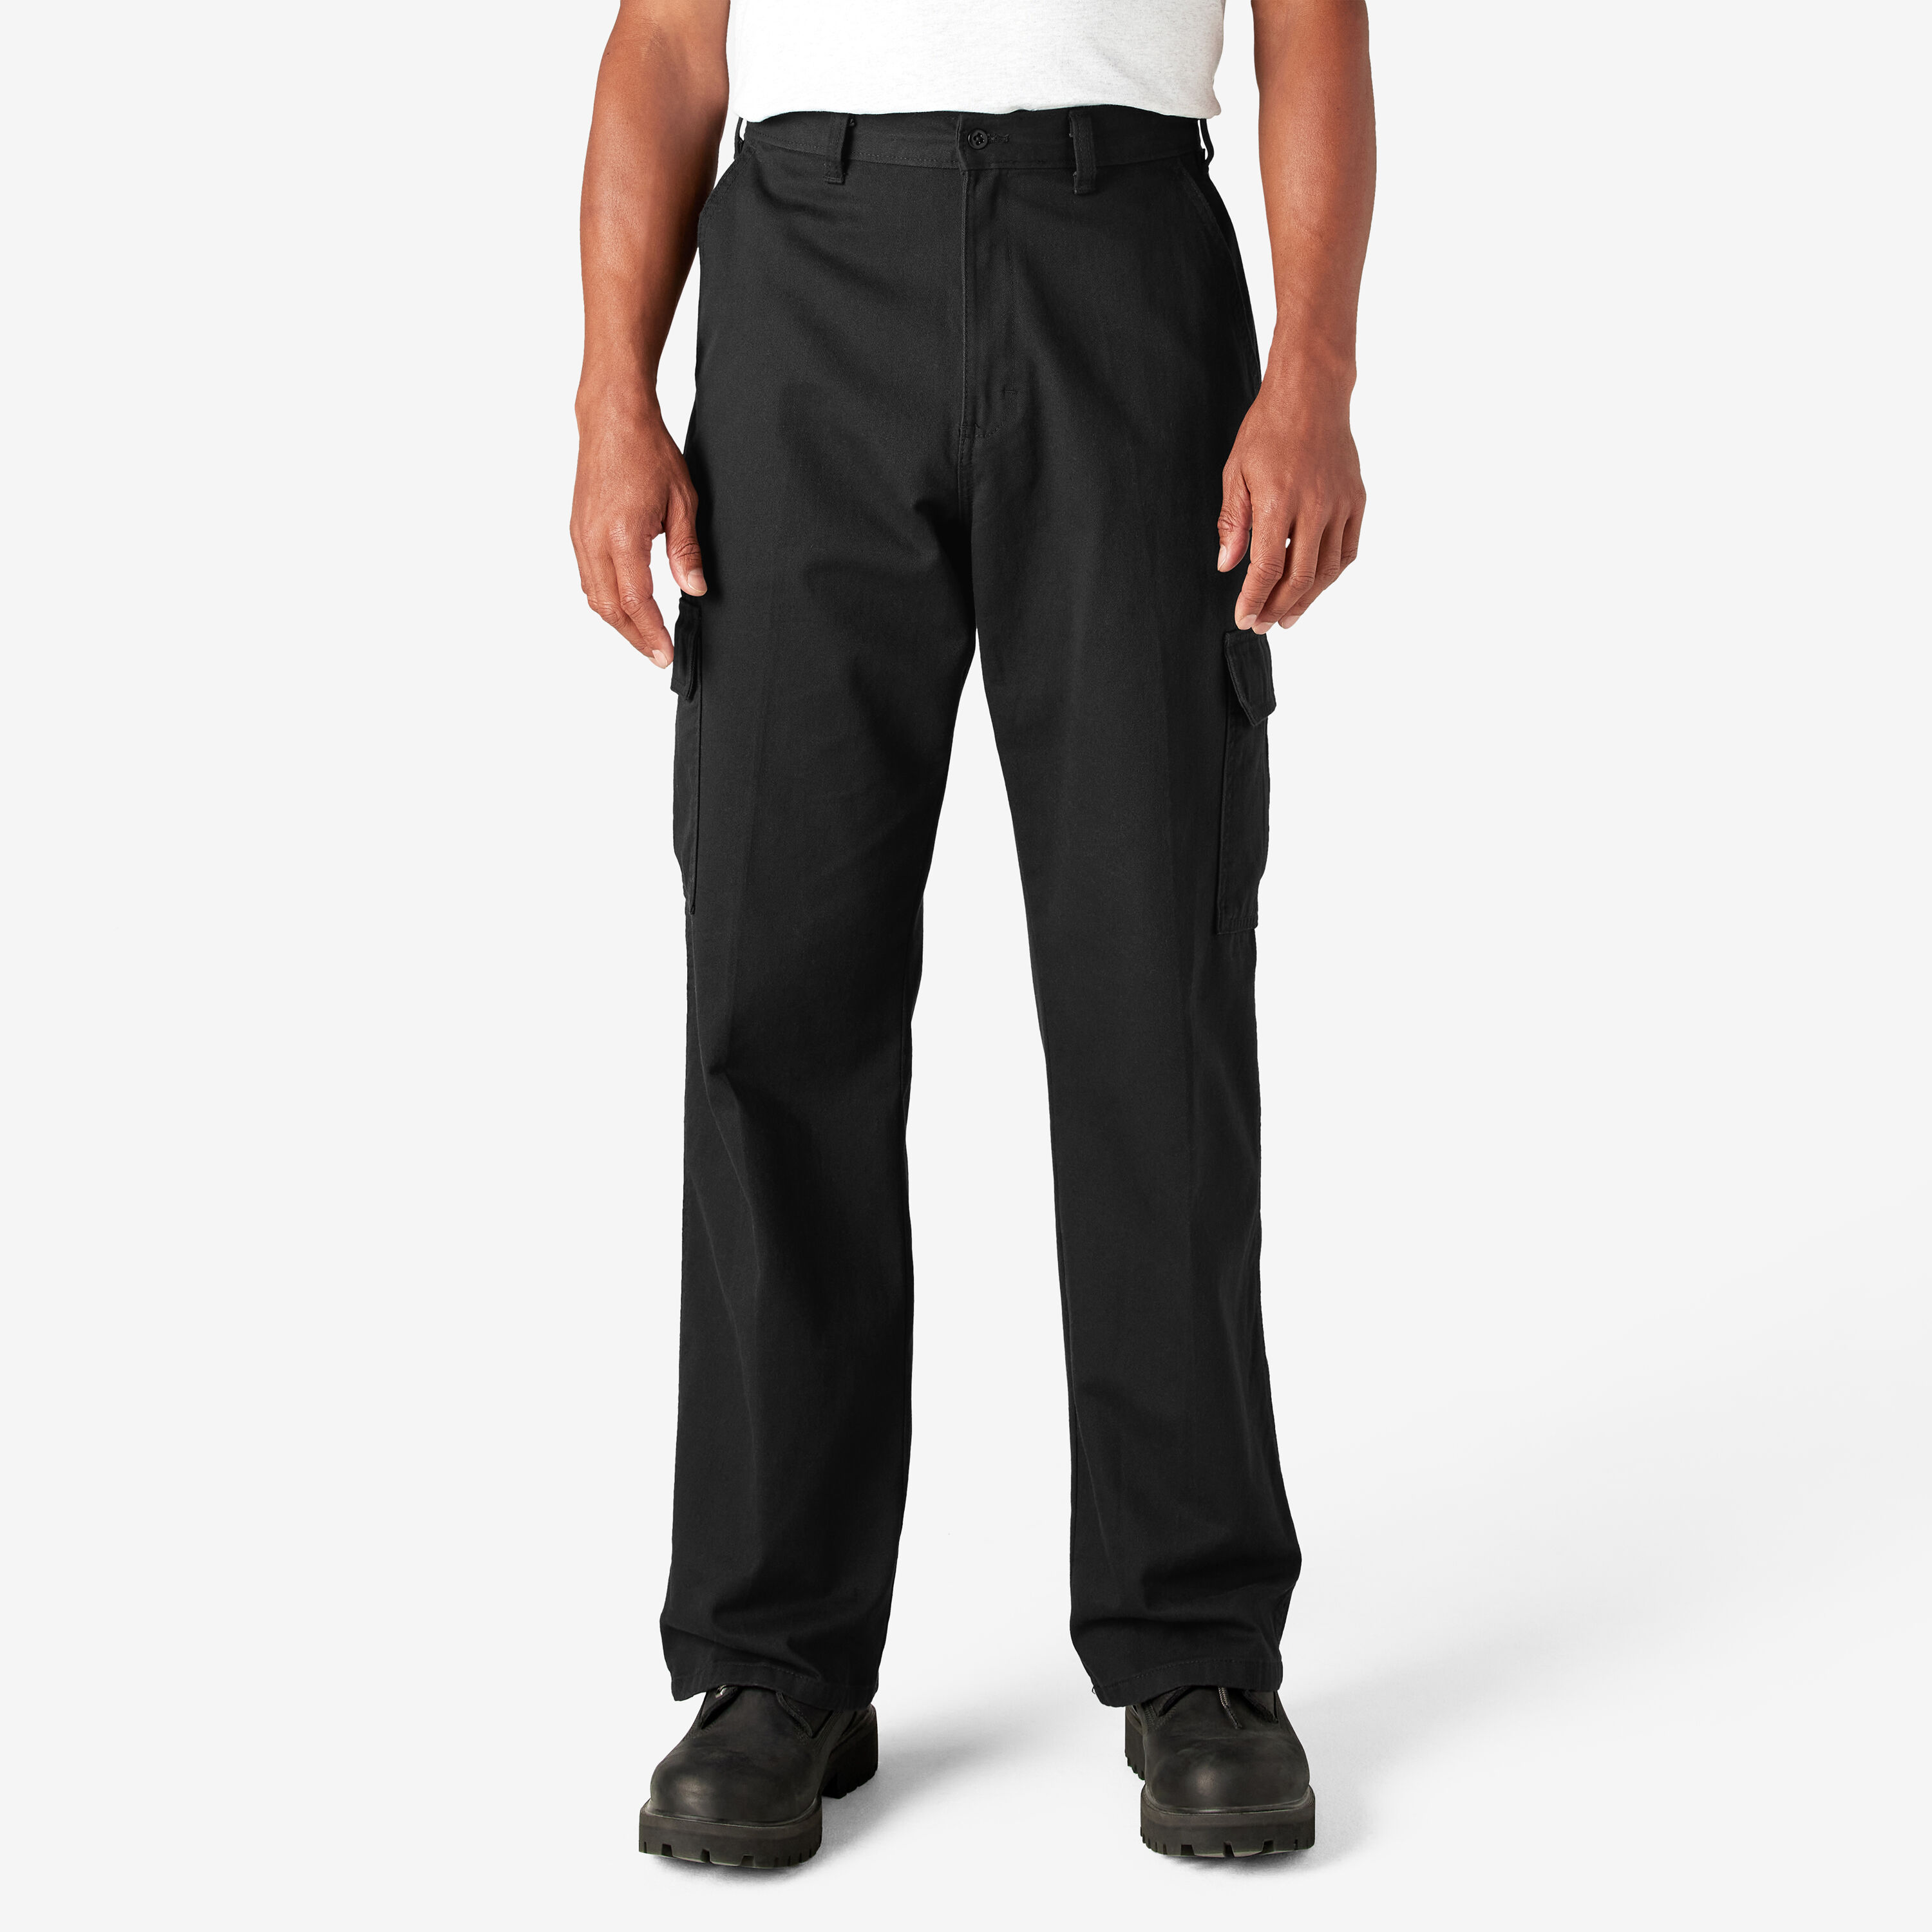 Mens Cargo Pants Alalaso Mens Full Elastic Waist Loose Fit Lightweight Workwear Cargo Pants 